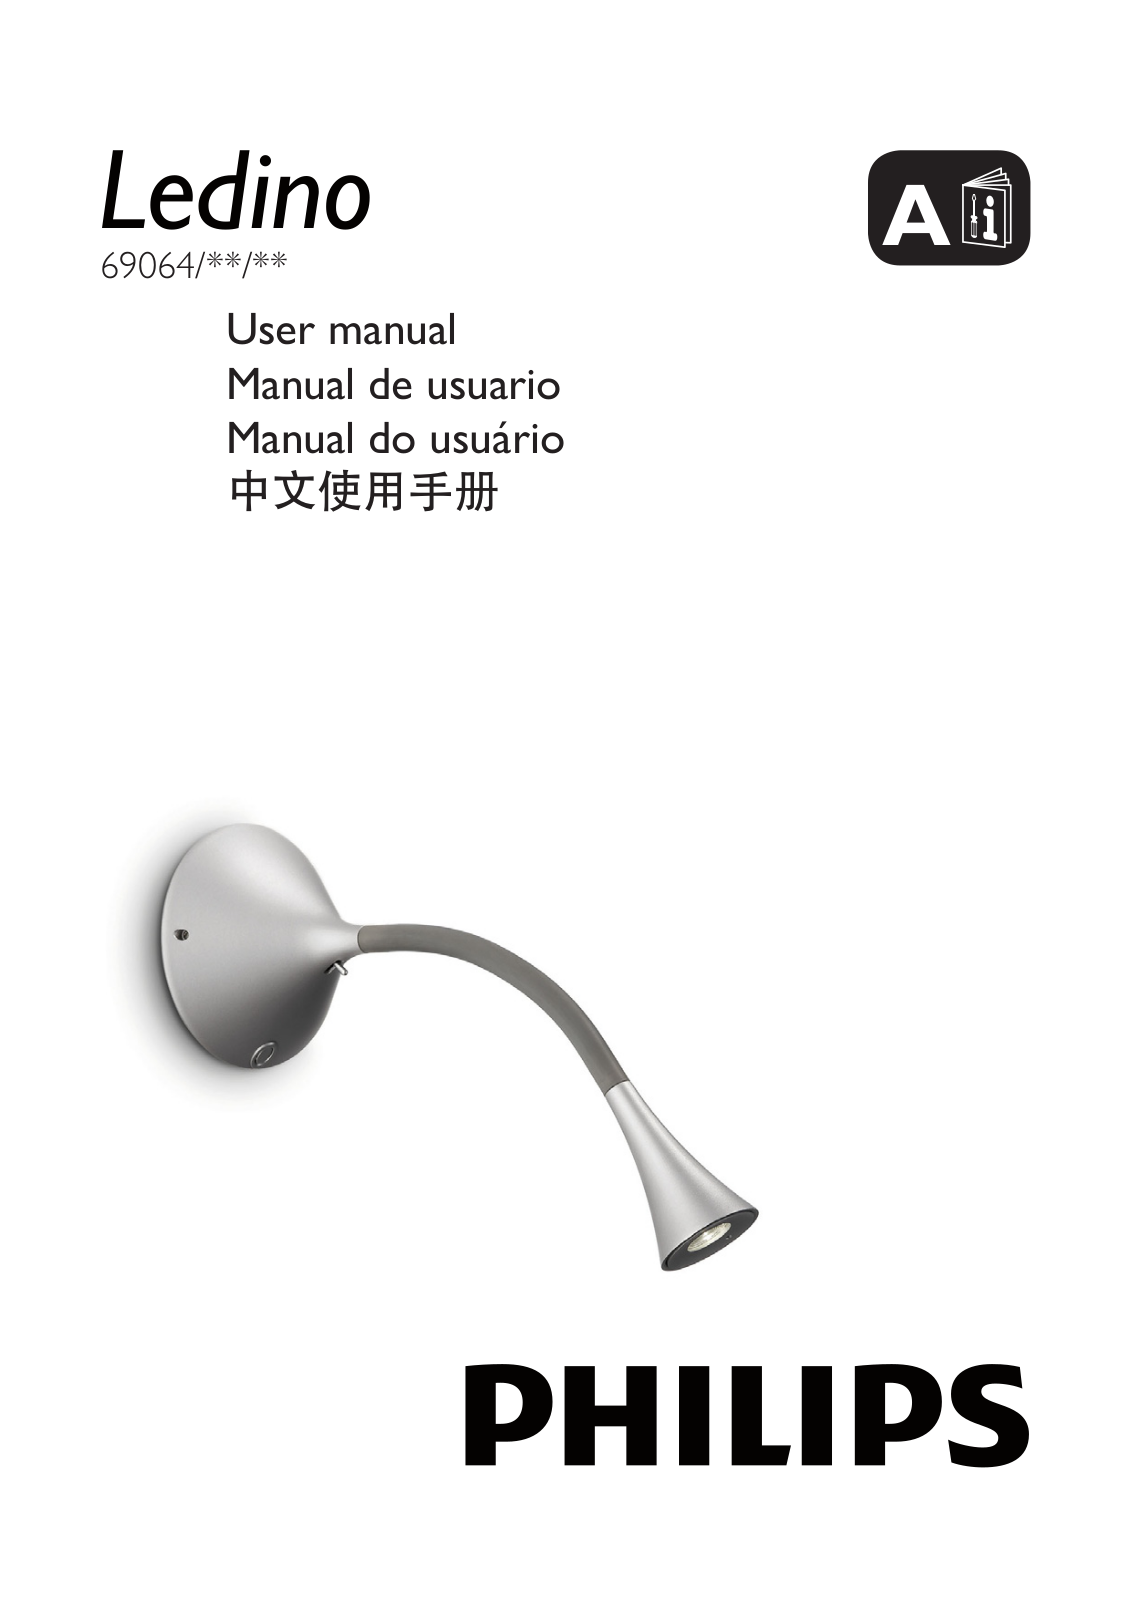 Philips 69064 User Manual